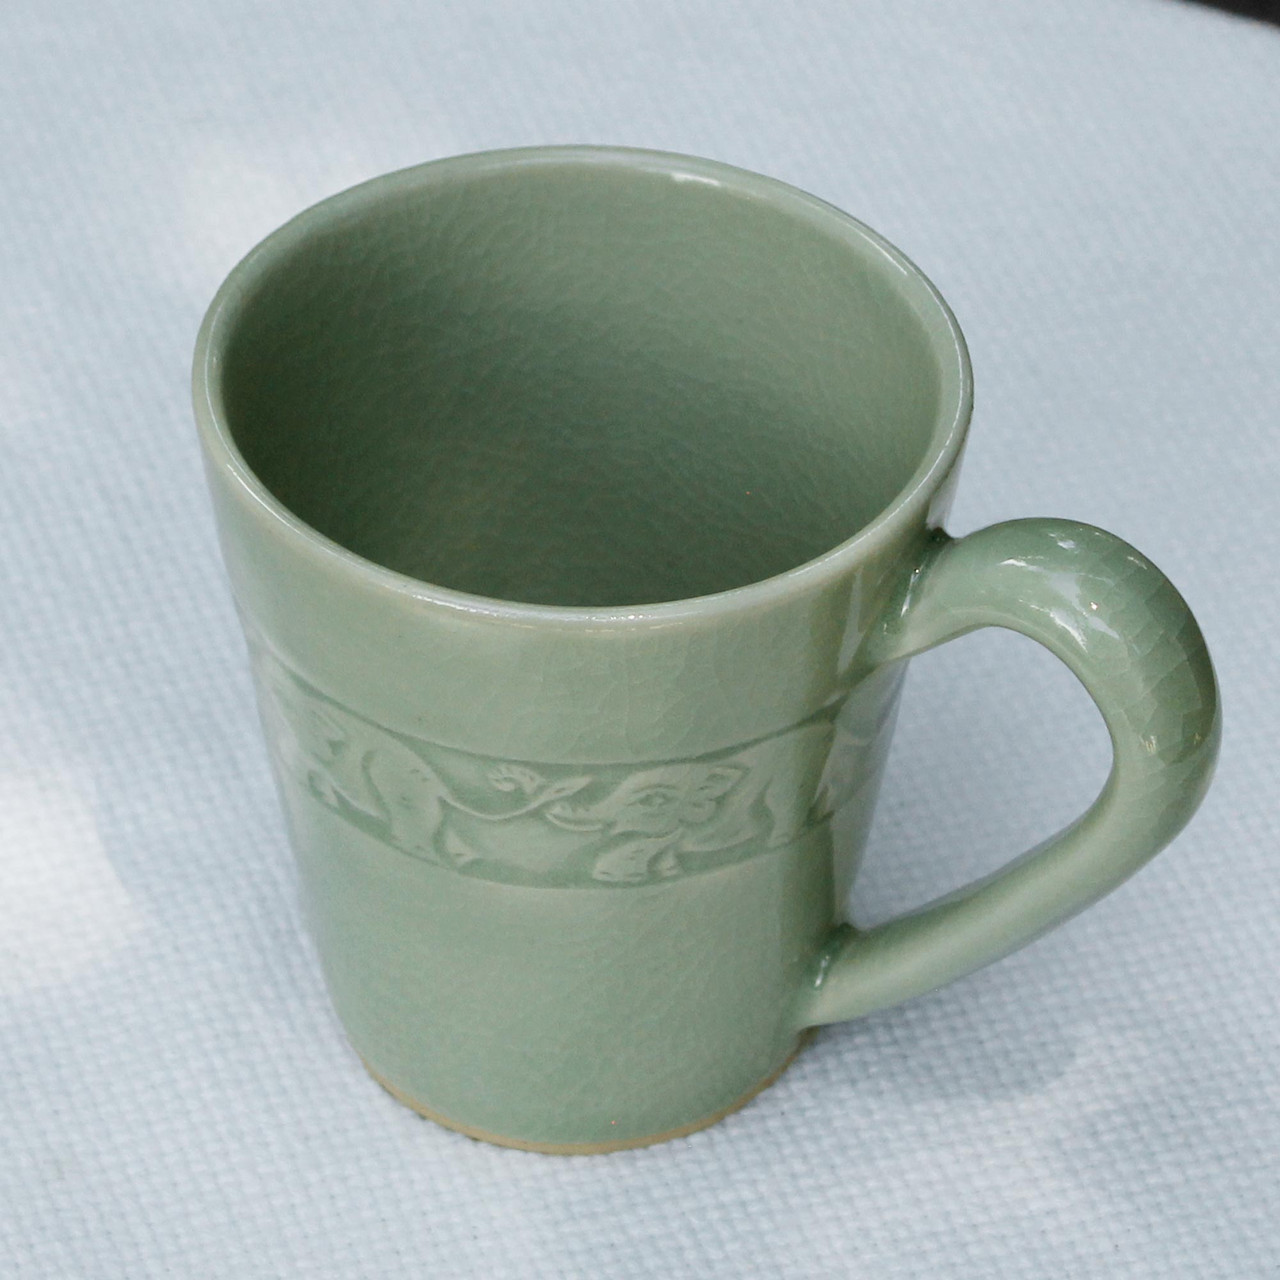 Celadon Ceramic Elephant Mug in Green from Thailand (10 oz.) - Elephant  Handle in Green